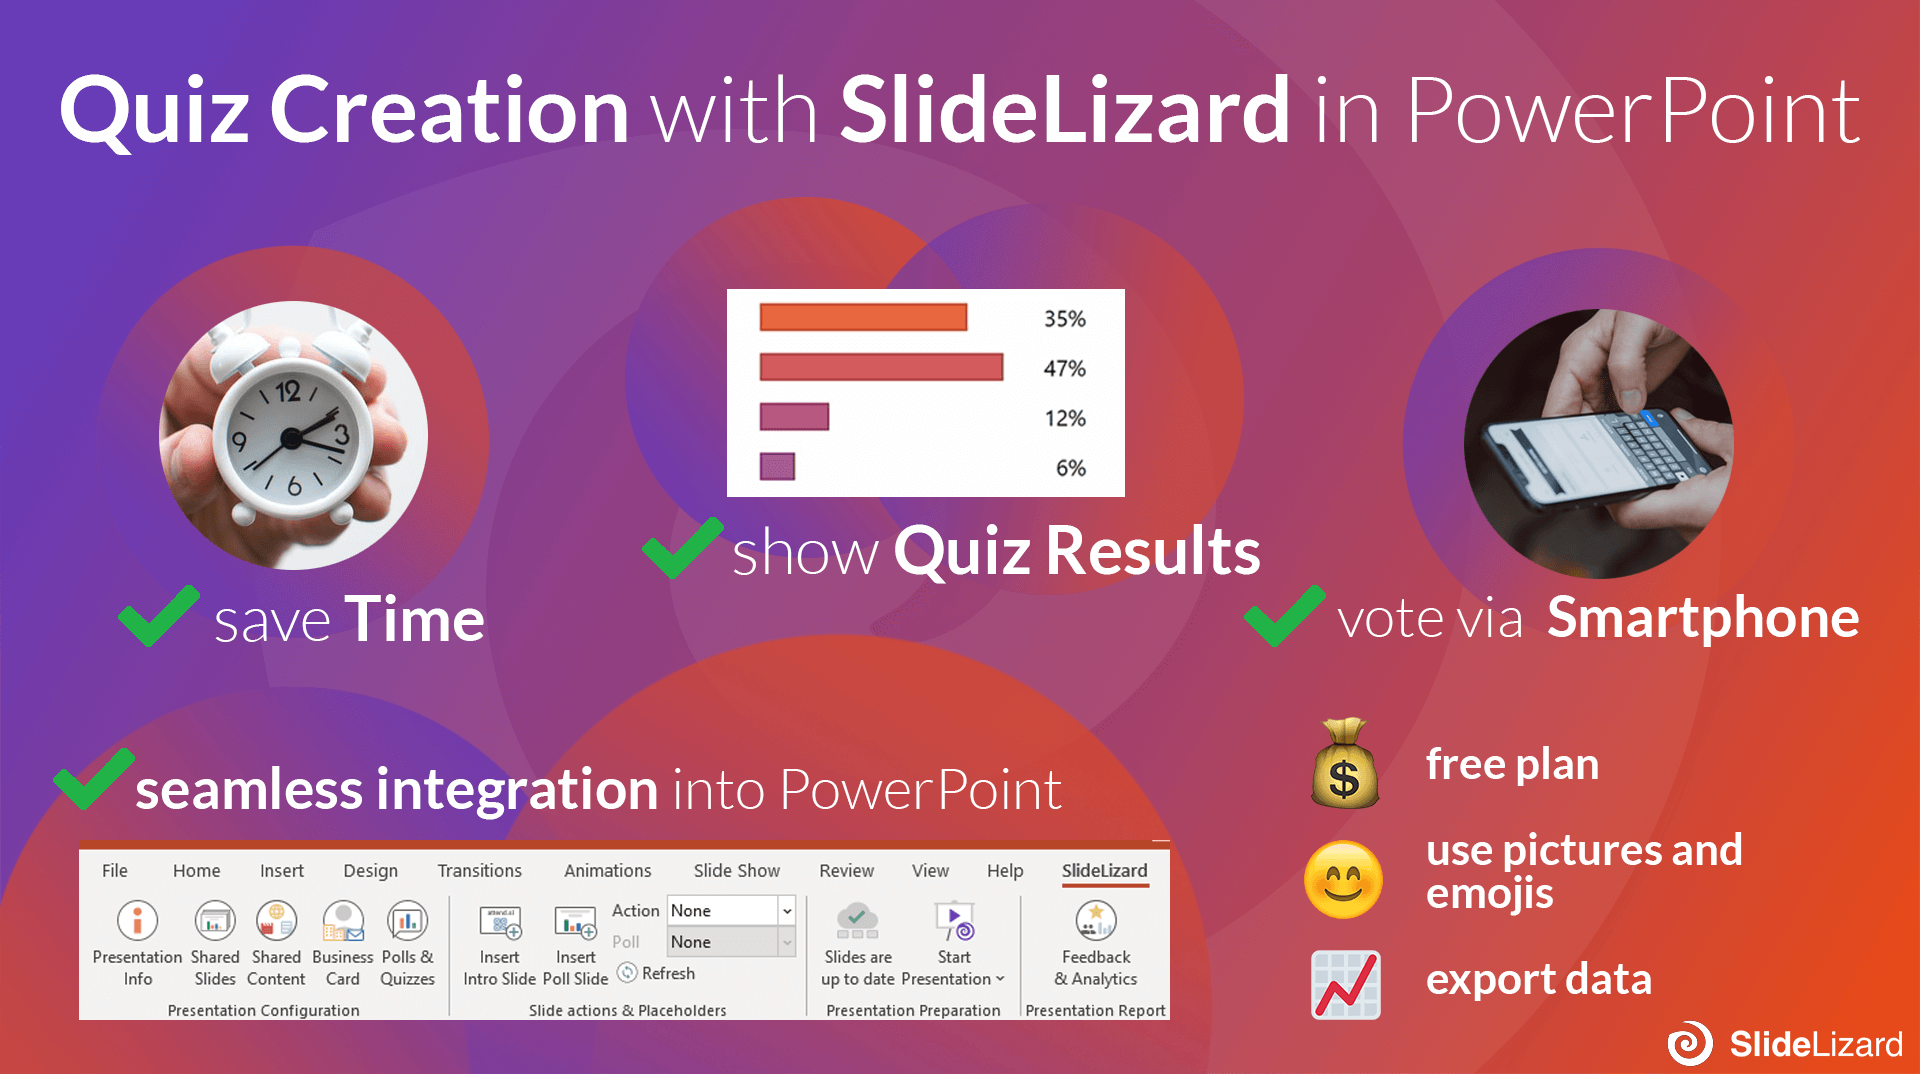 the benefits of quiz creation with SlideLizard